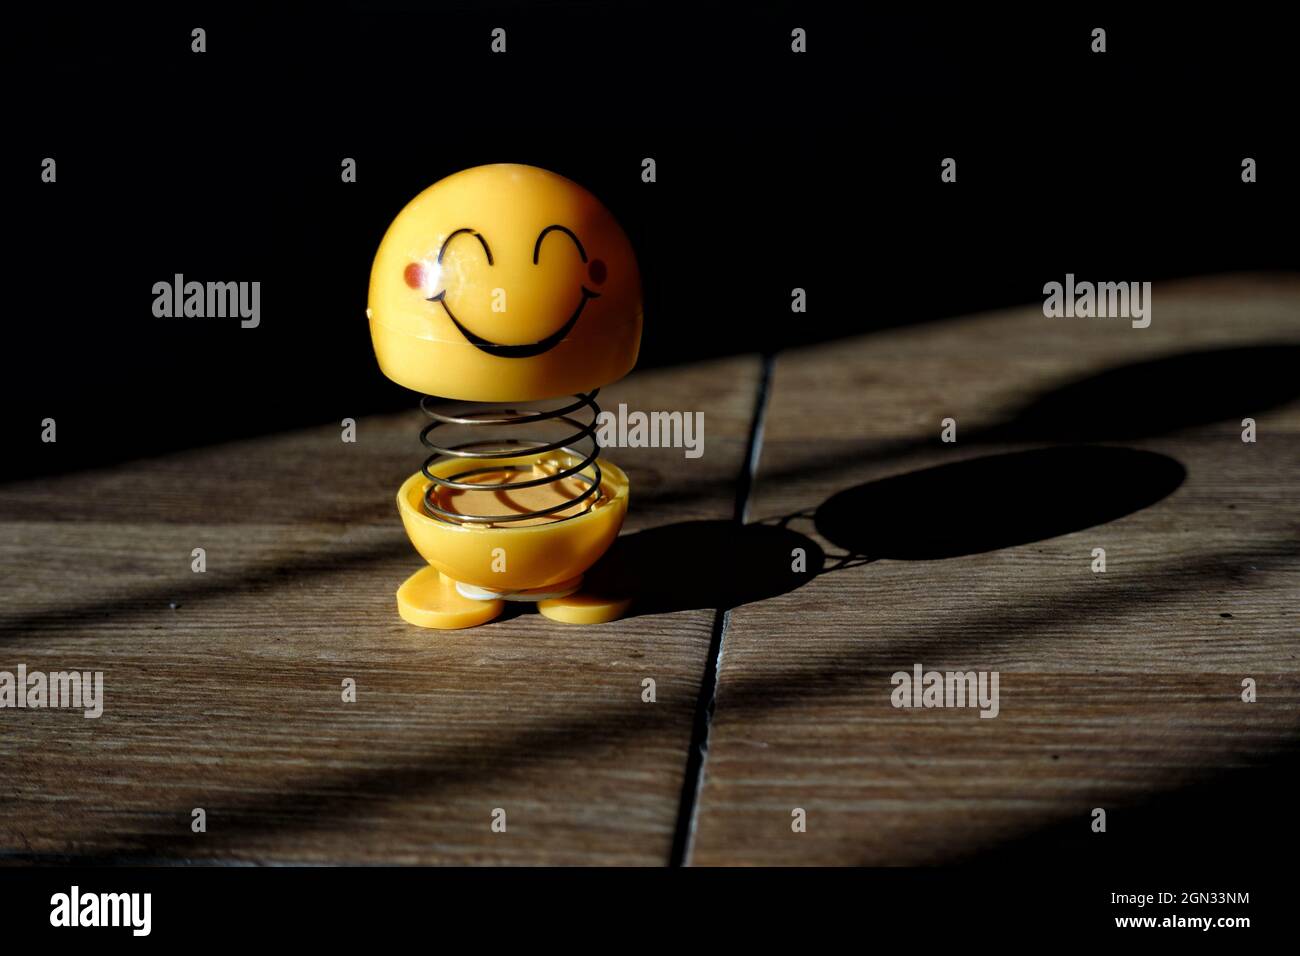 yellow smiling emoji toy in the sun Stock Photo